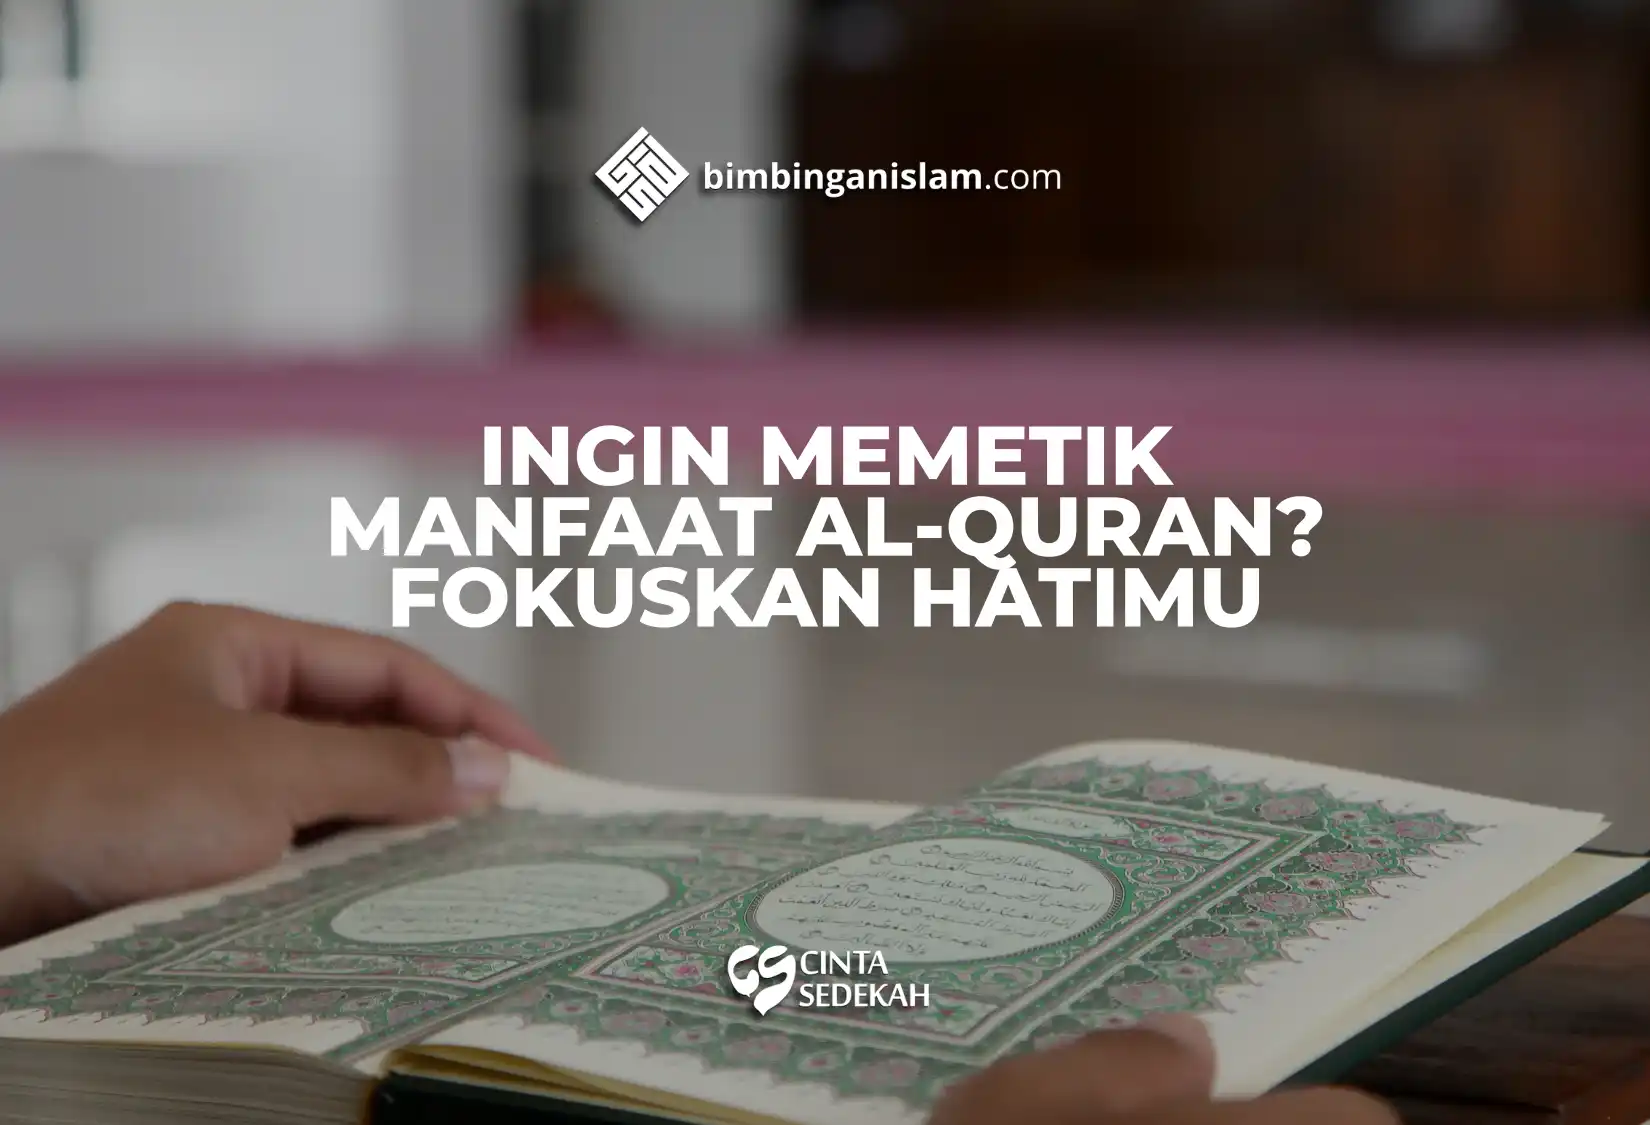 Ingin Memetik Manfaat Al-Quran Fokuskan Hatimu